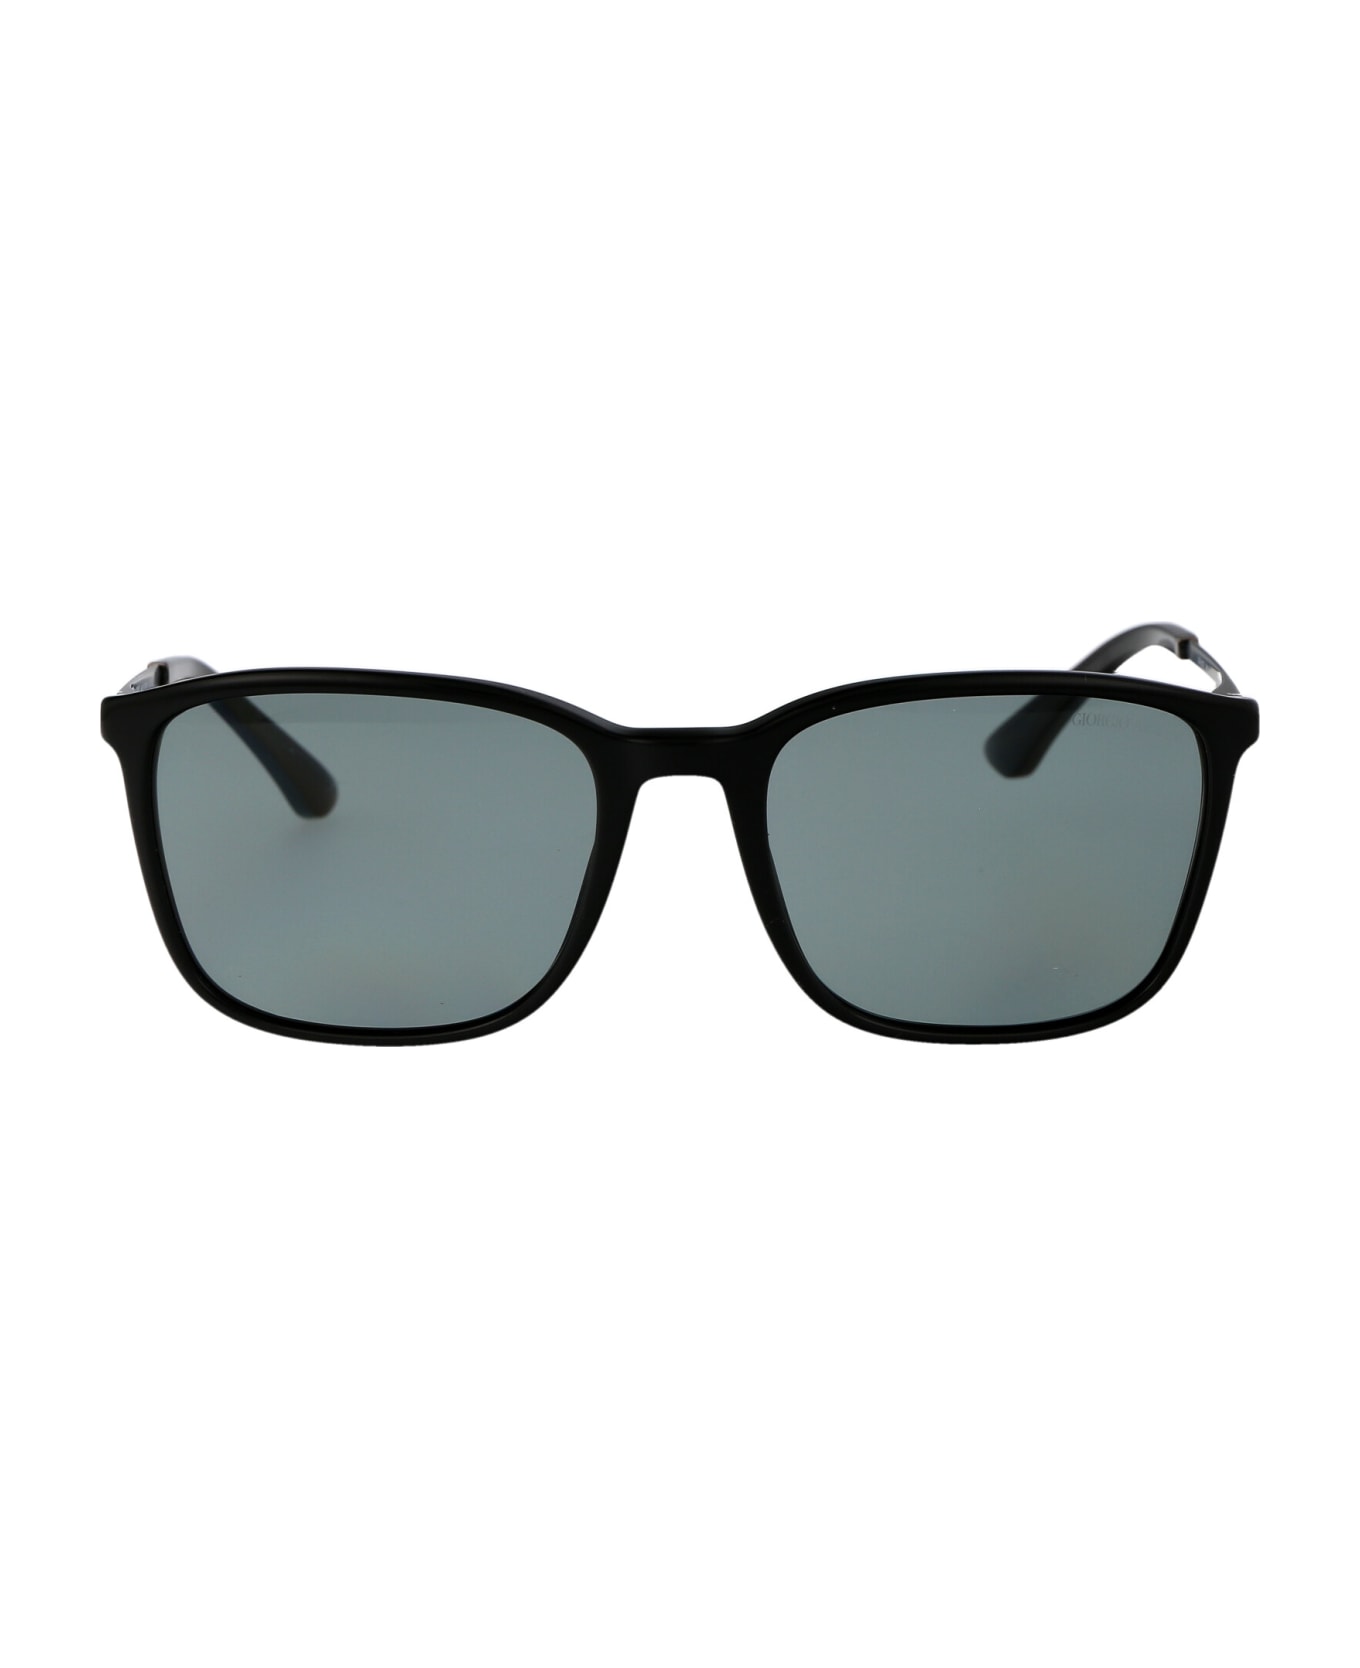 Giorgio Armani 0ar8197 Sunglasses - 5001/1 Black